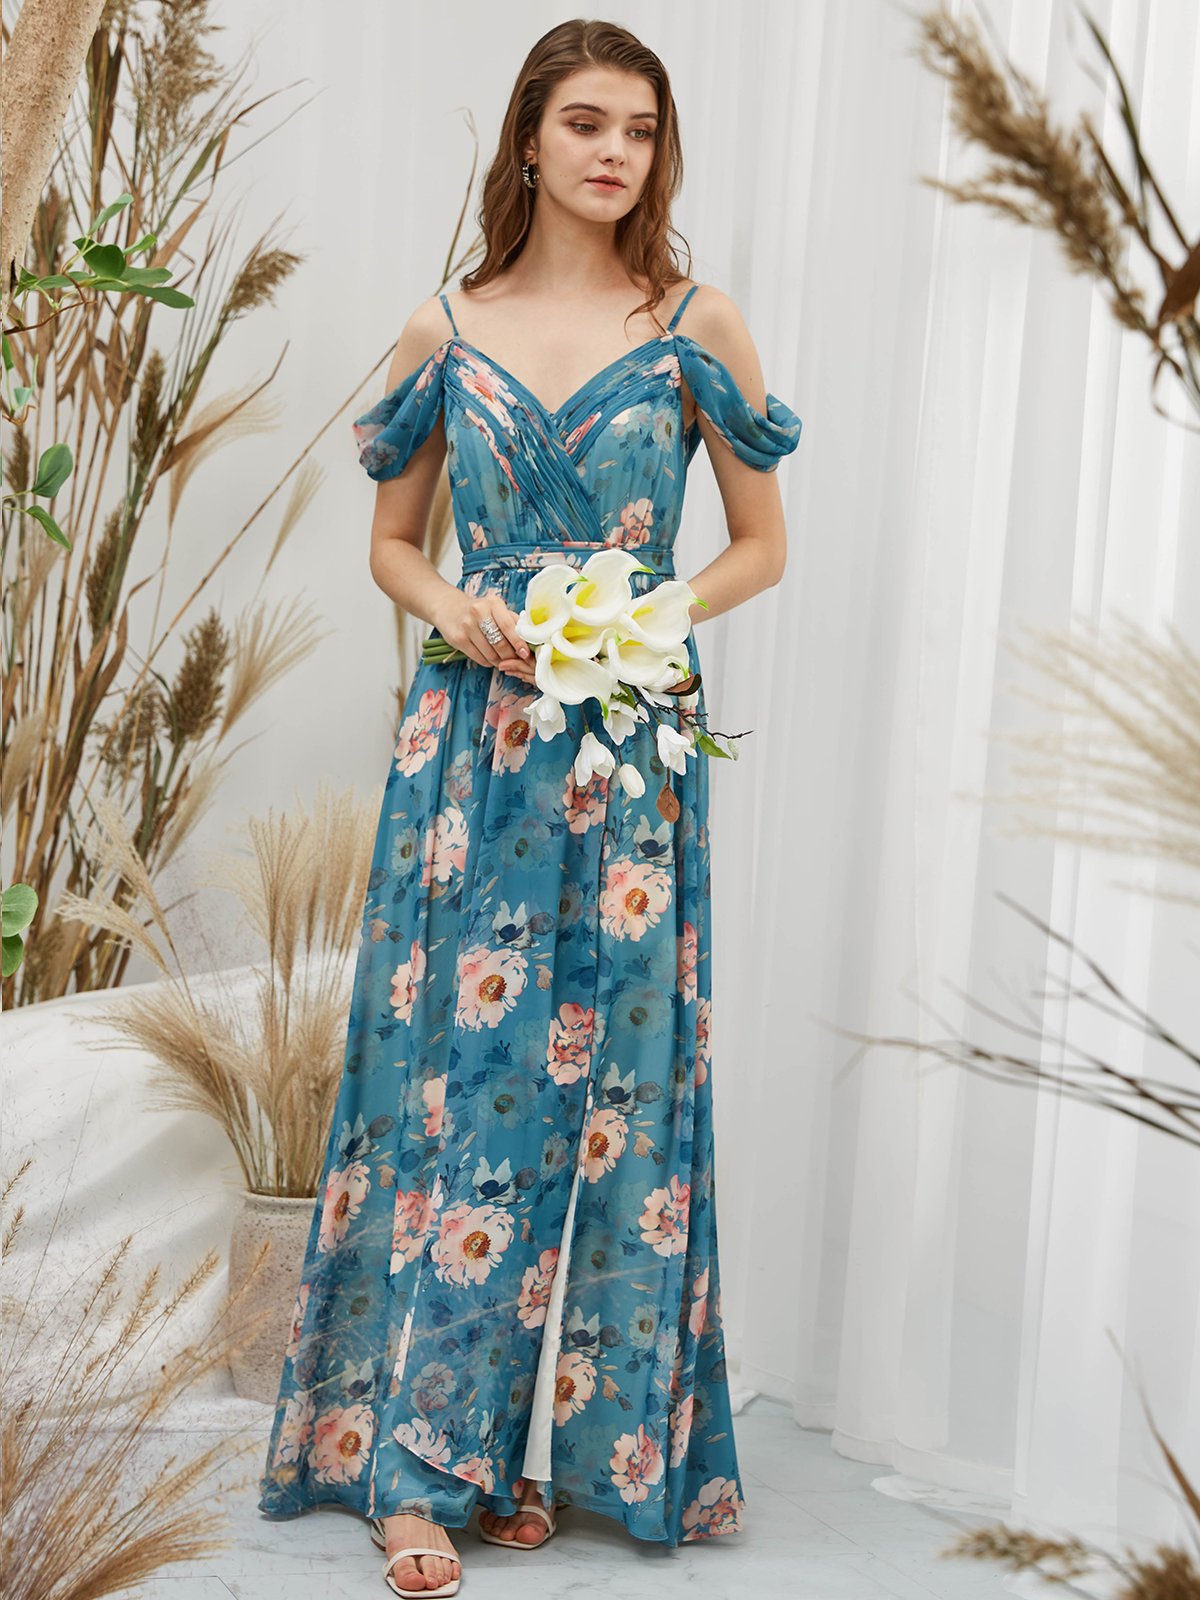 Träger V-Ausschnitt, schulterfrei, Chiffon-Print, bodenlanges, formelles Abendkleid mit floralem Teal